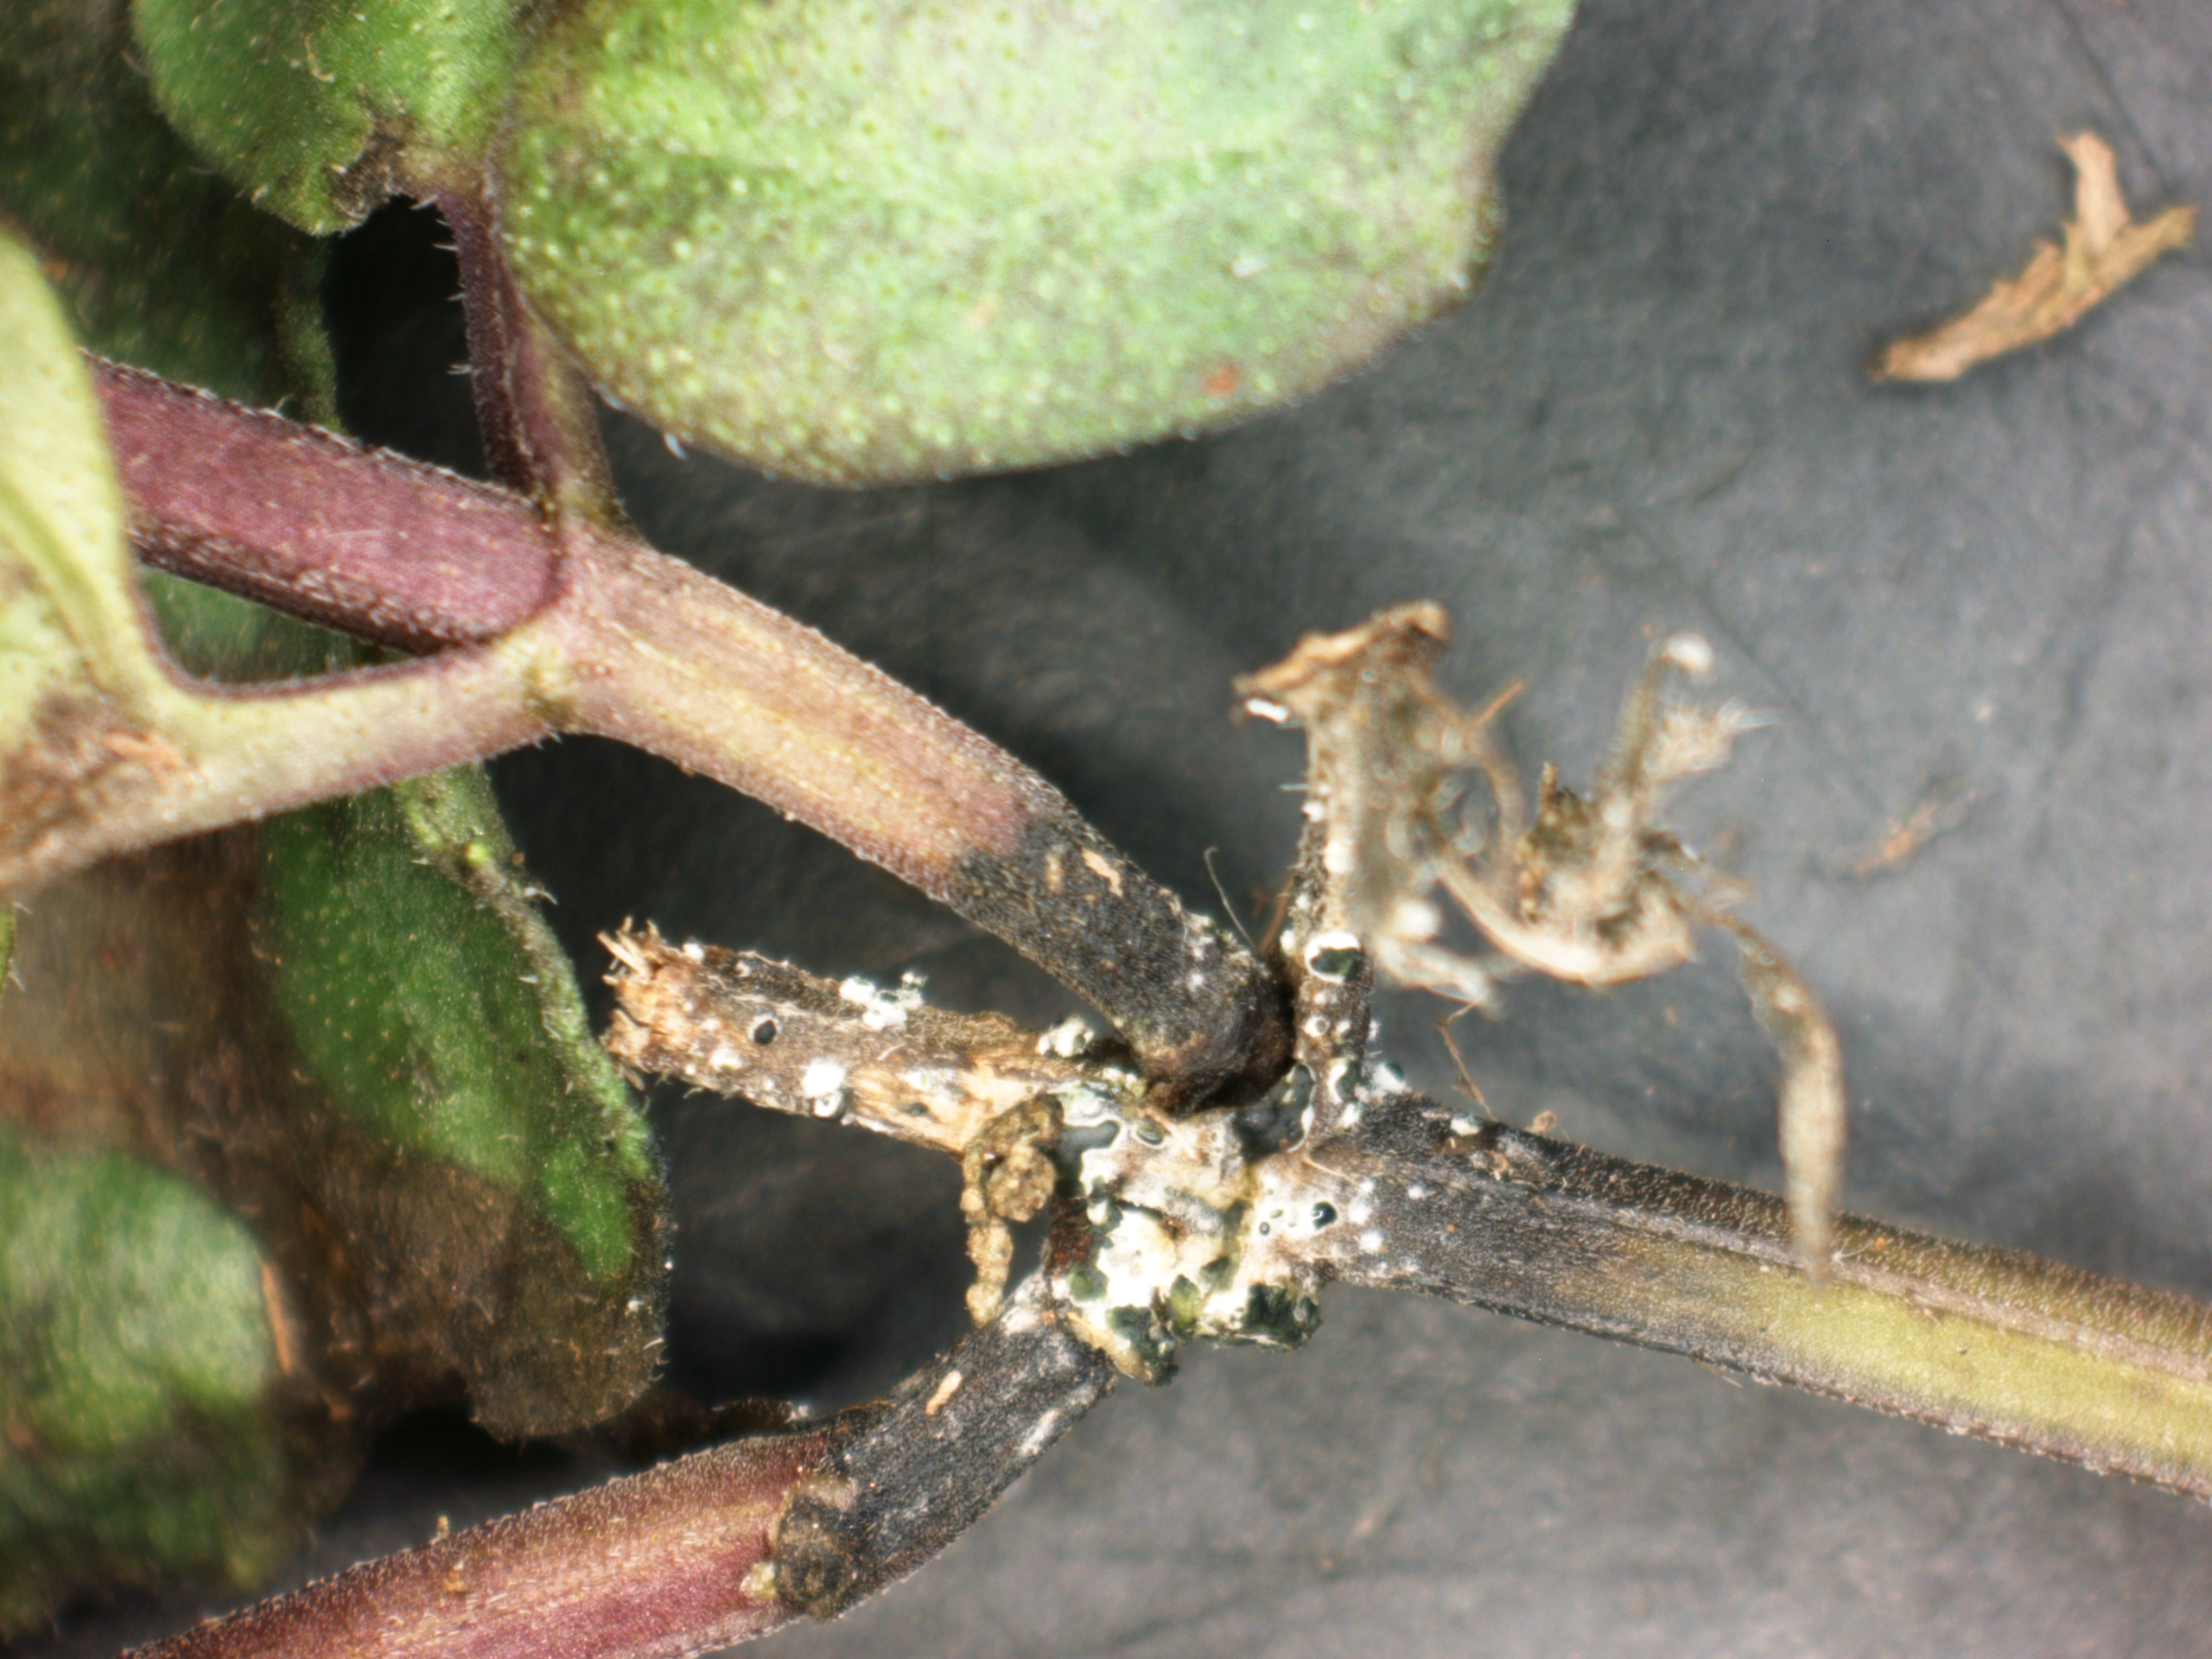 Myrothecium stem canker